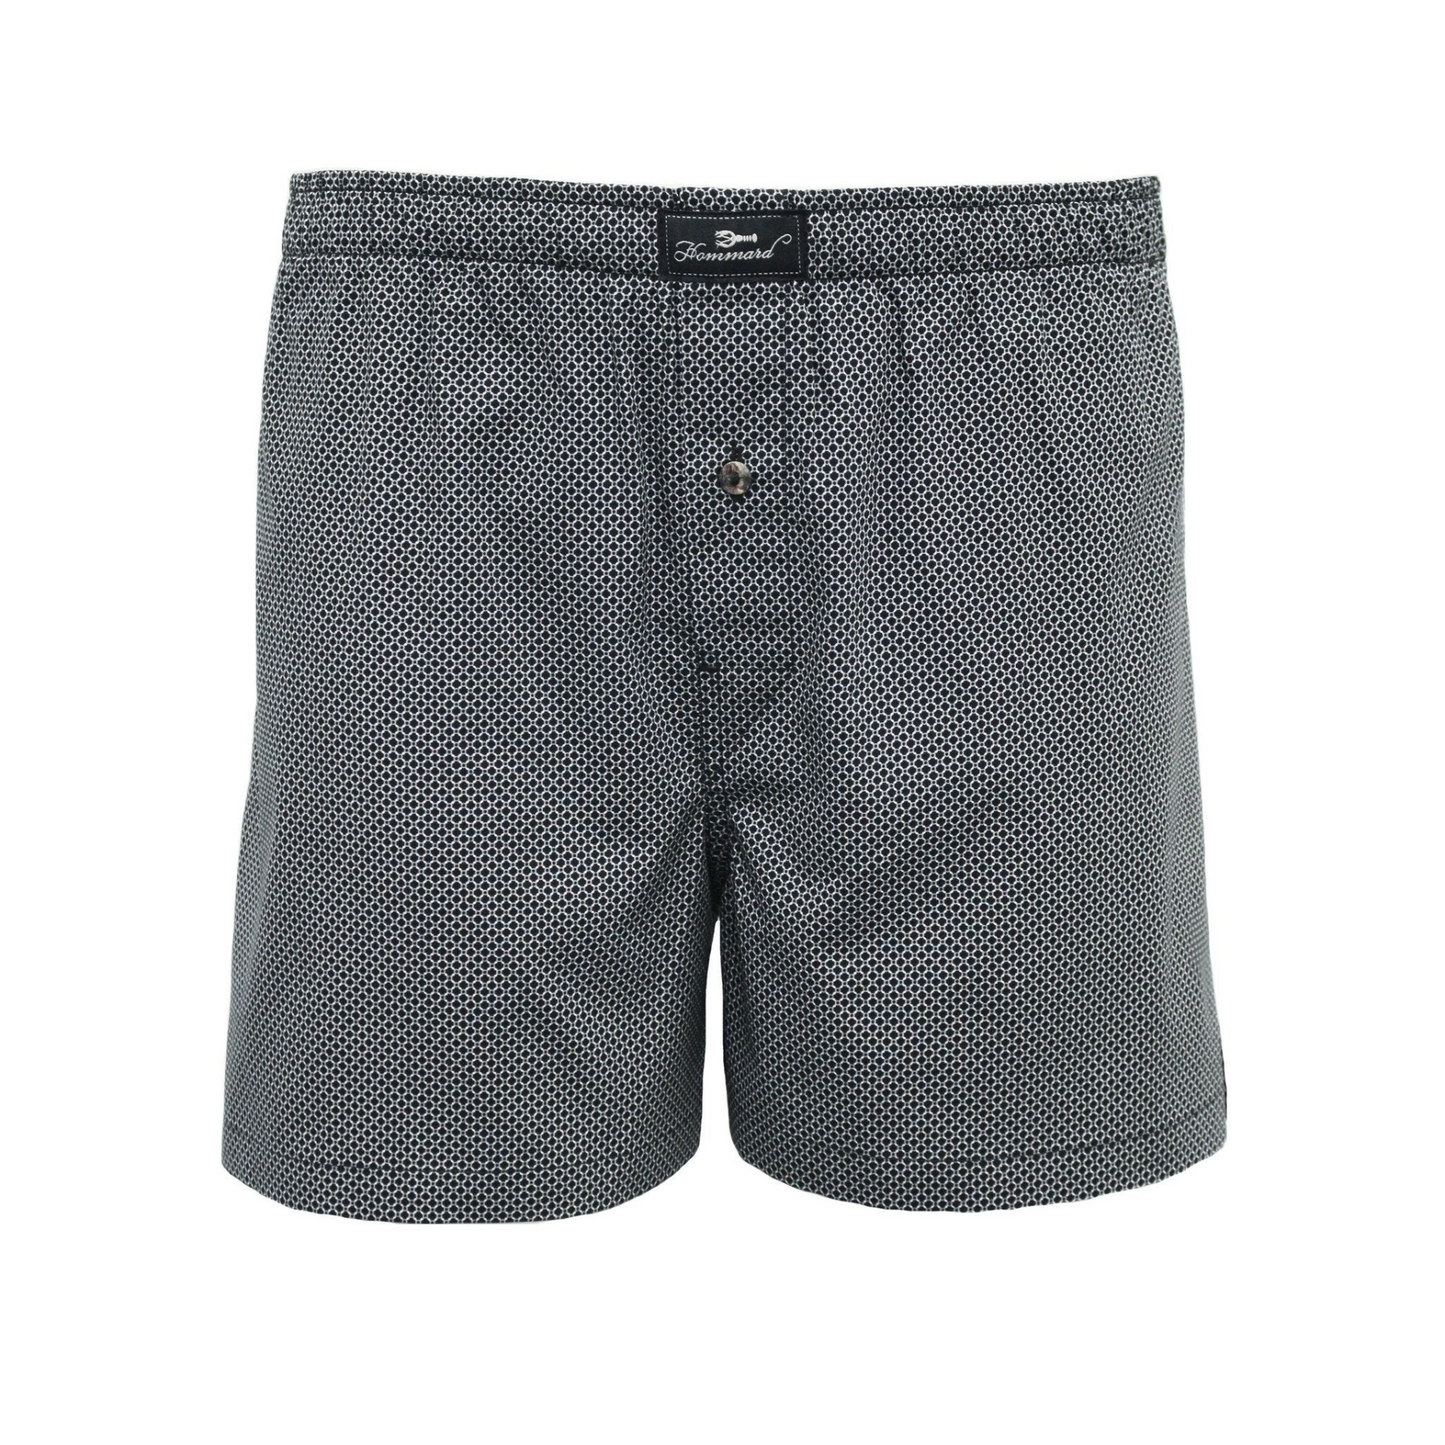 Woven Cotton Boxer Shorts Black Dot BC004